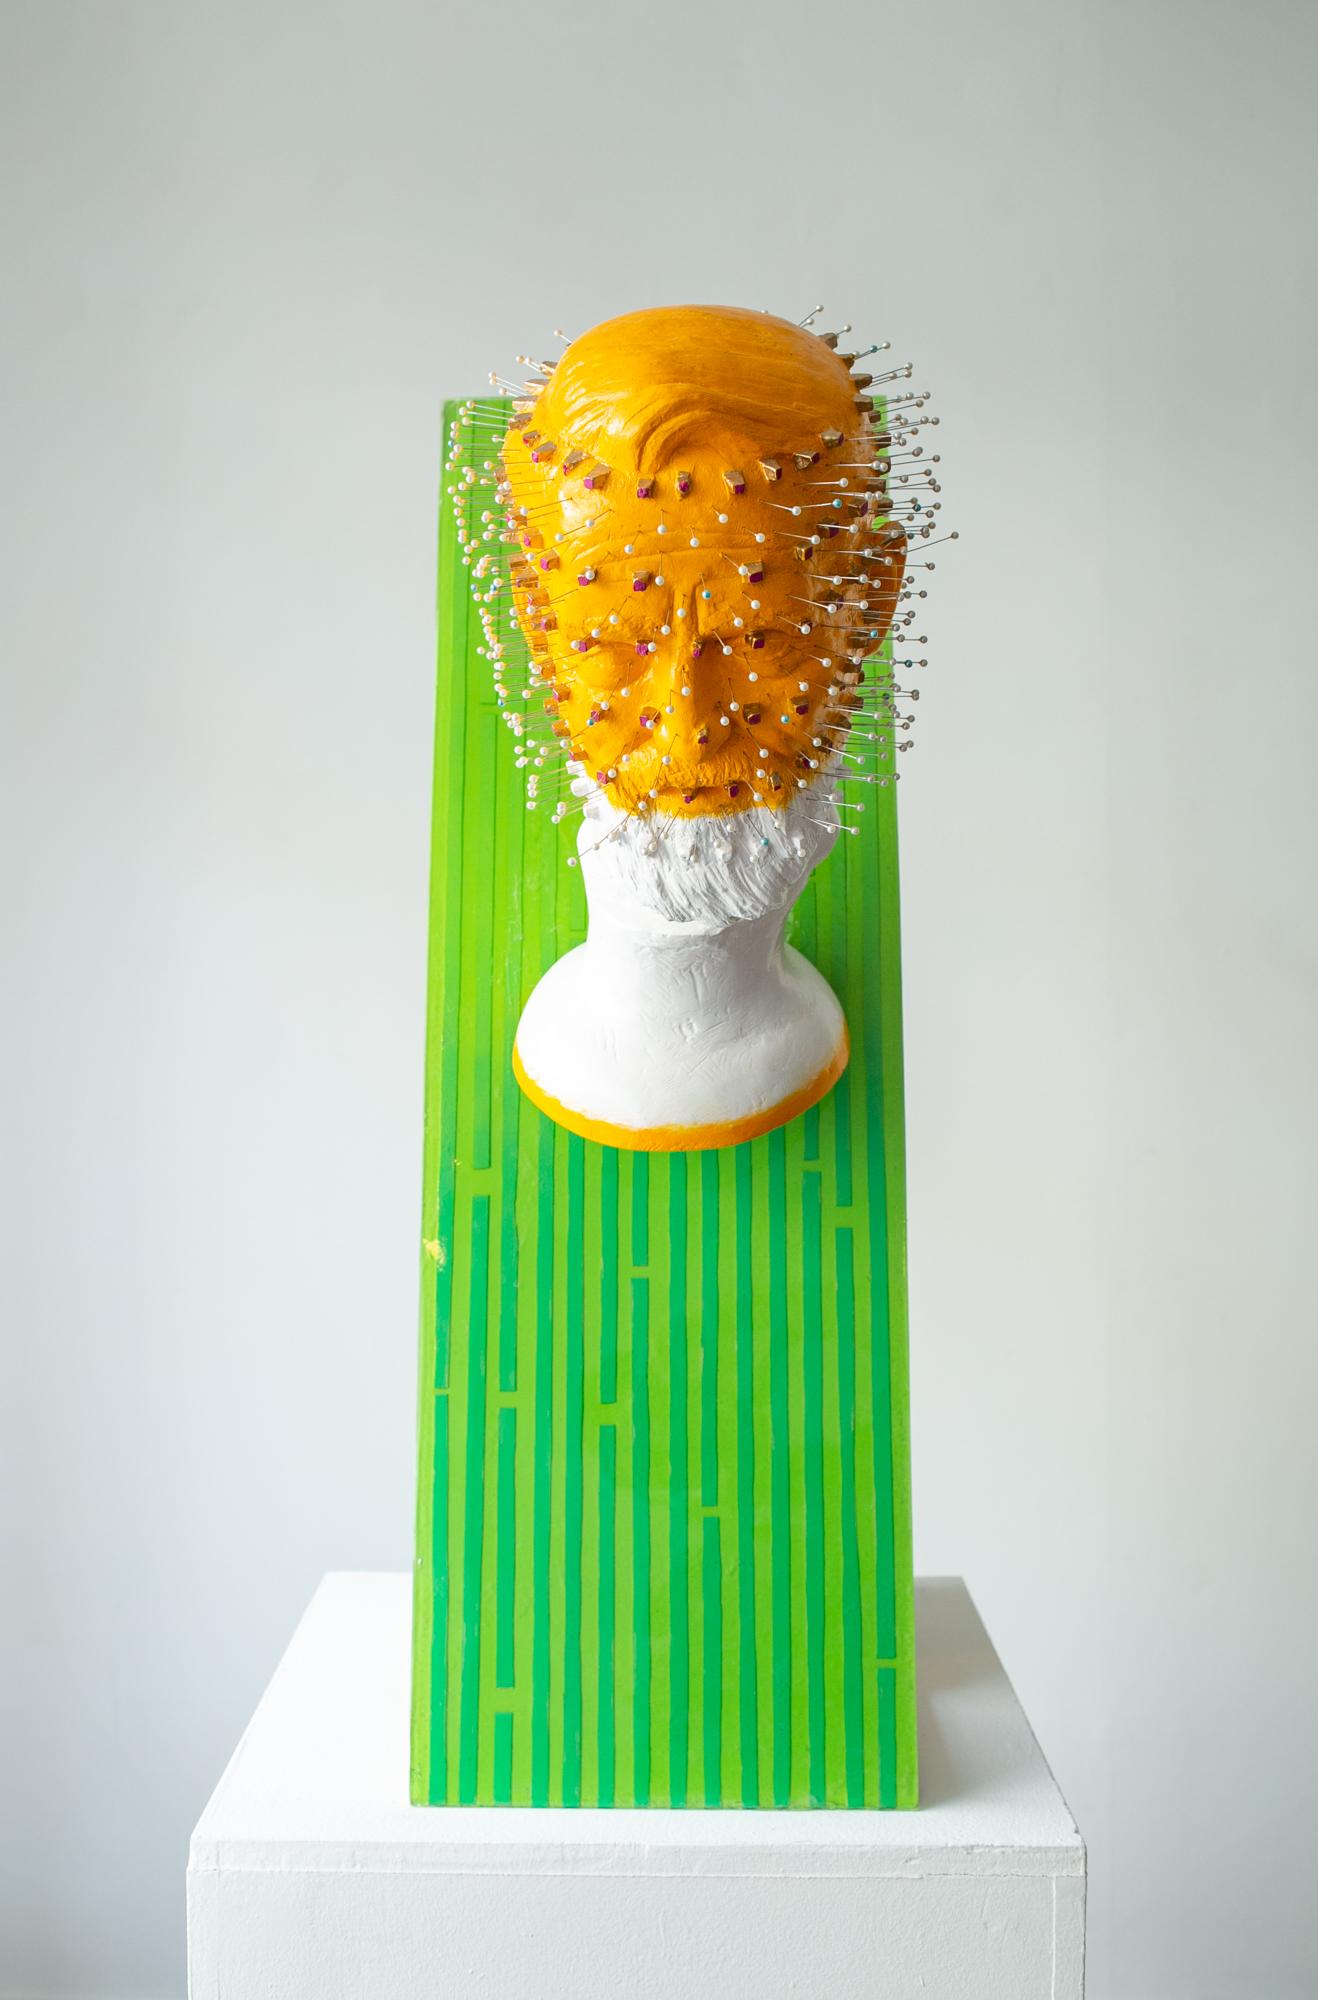 Jedediah Morfit Figurative Sculpture - "Deepfake National Monument", Orange, Green, and White Free-Standing Sculpture